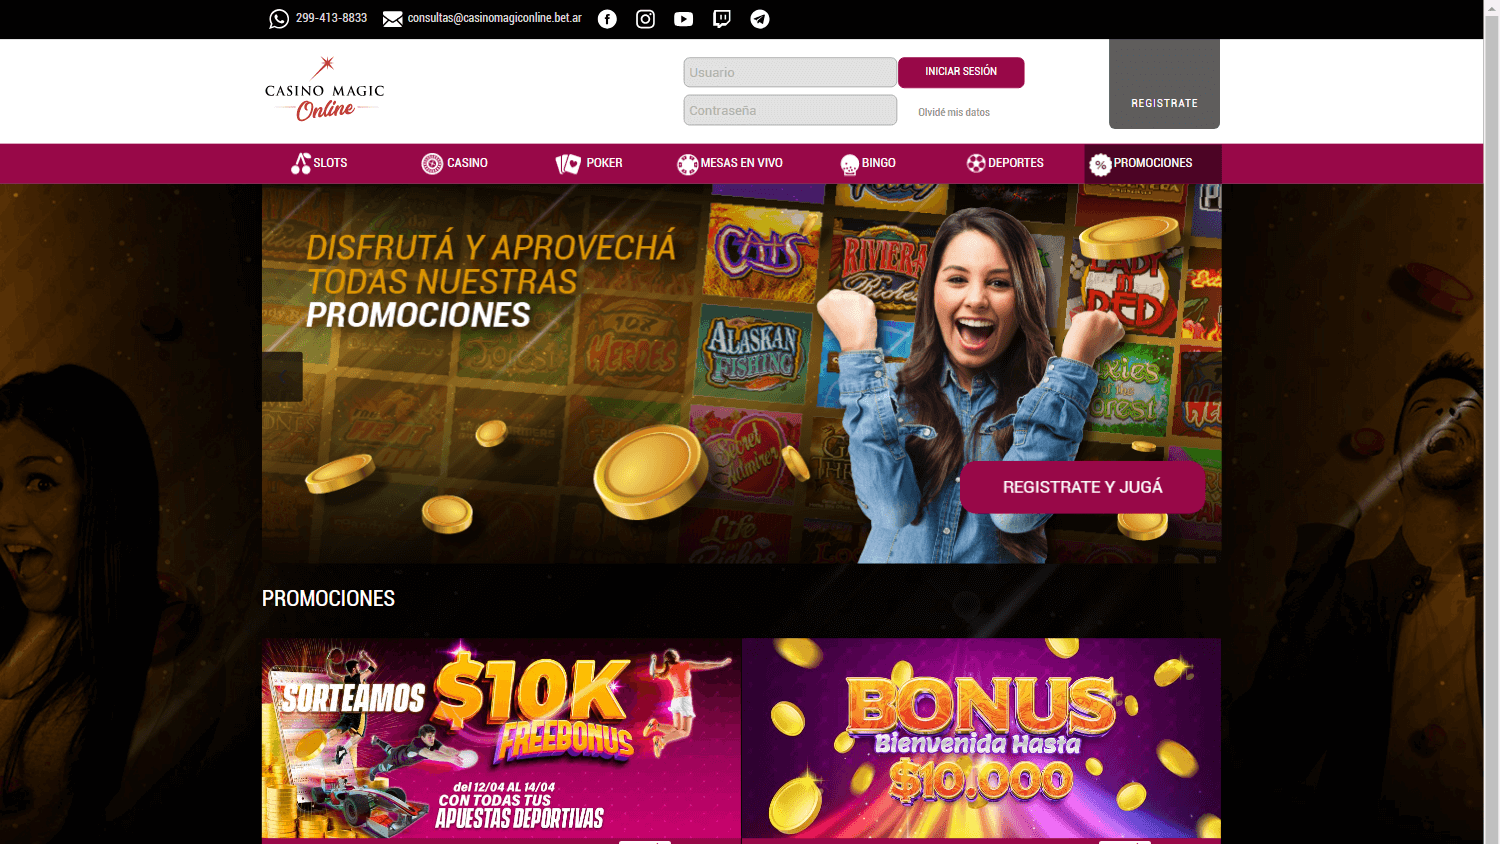 casino_magic_online_promotions_desktop